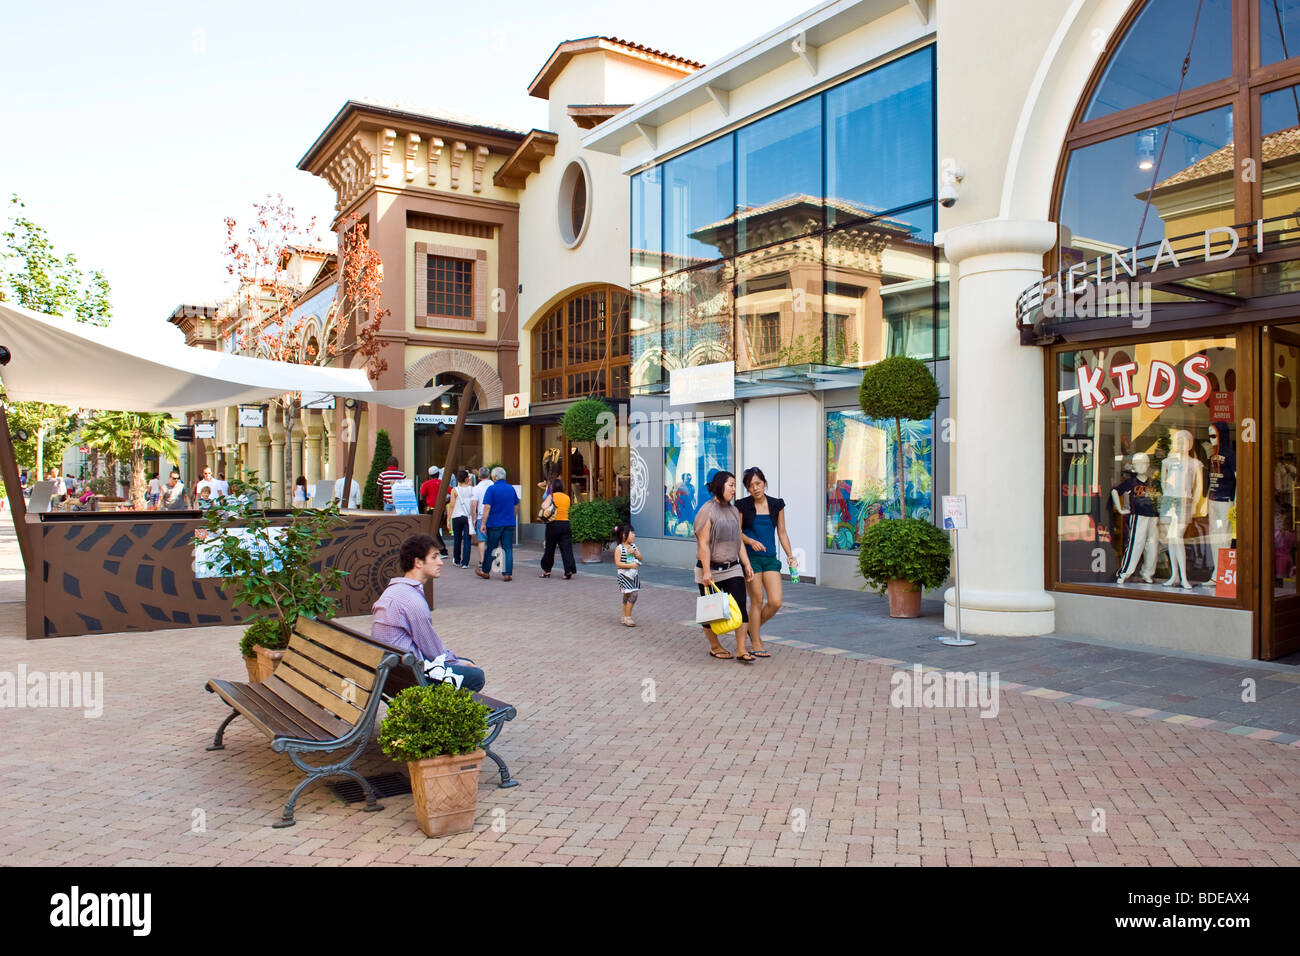 Shopping center Fidenza village, Fidenza, province of Parma, Italy Stock Photo